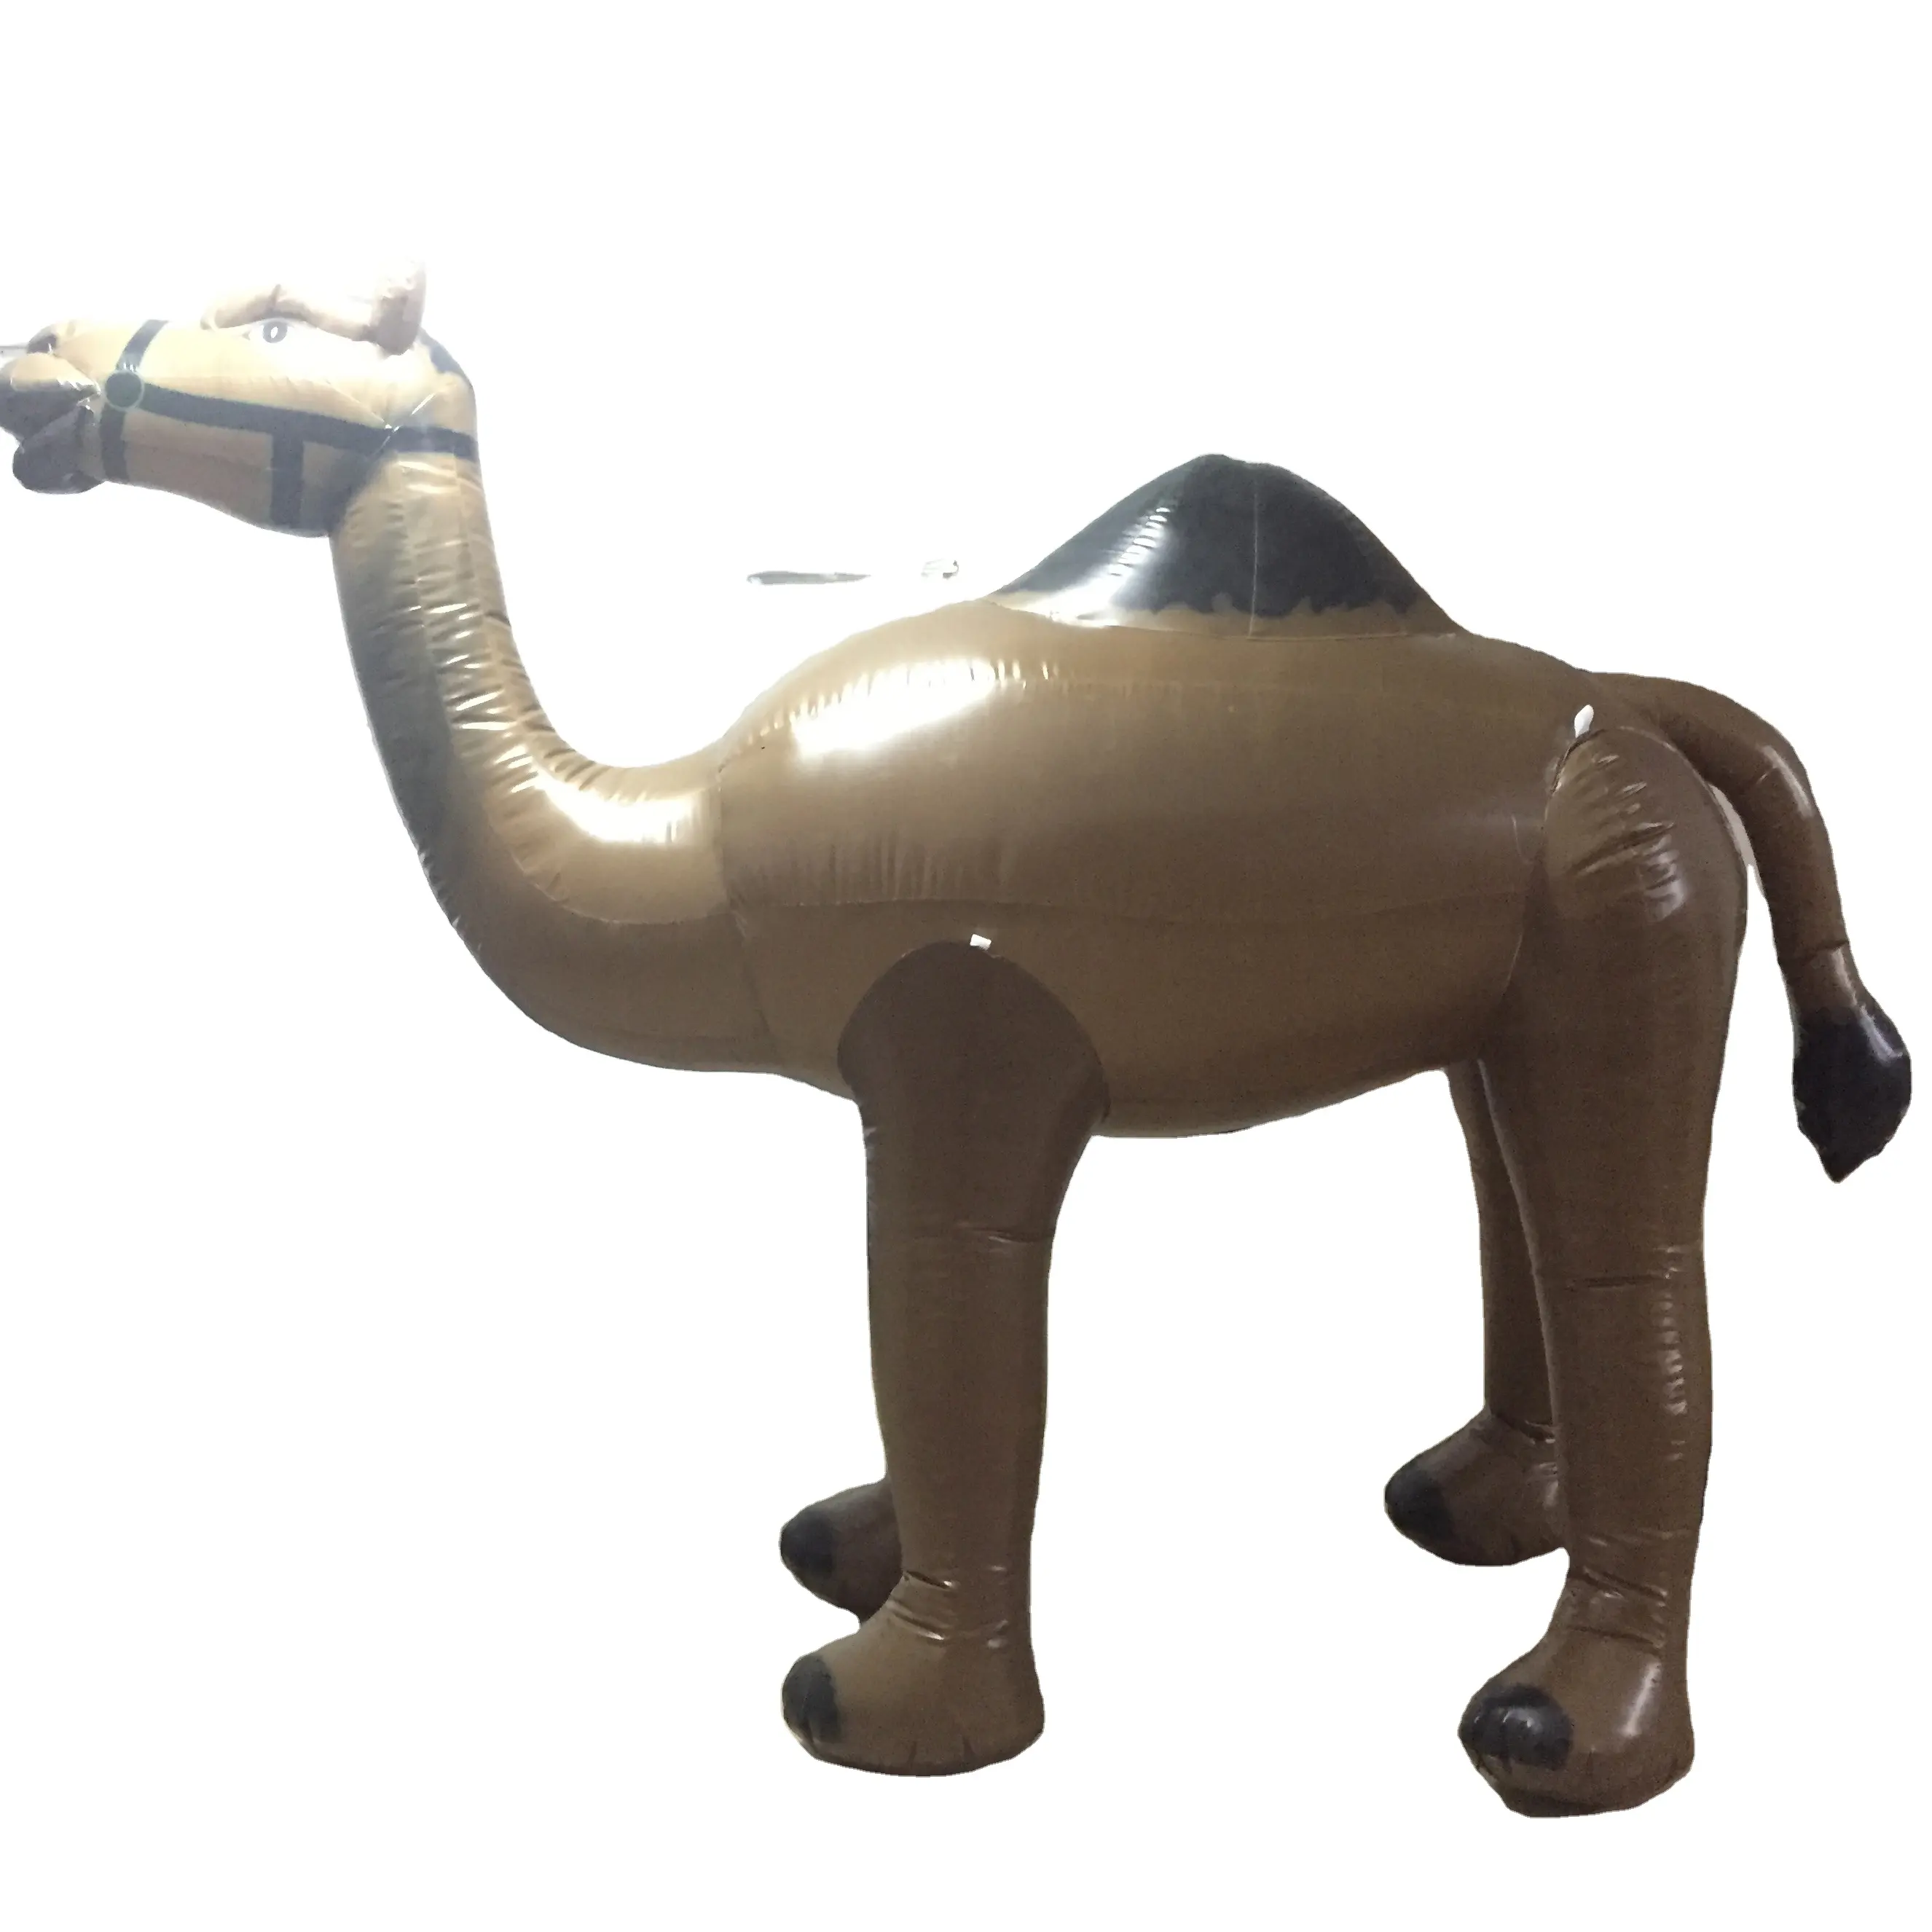 Animali di cammello fissi pubblicitari gonfiabili giganti in vendita